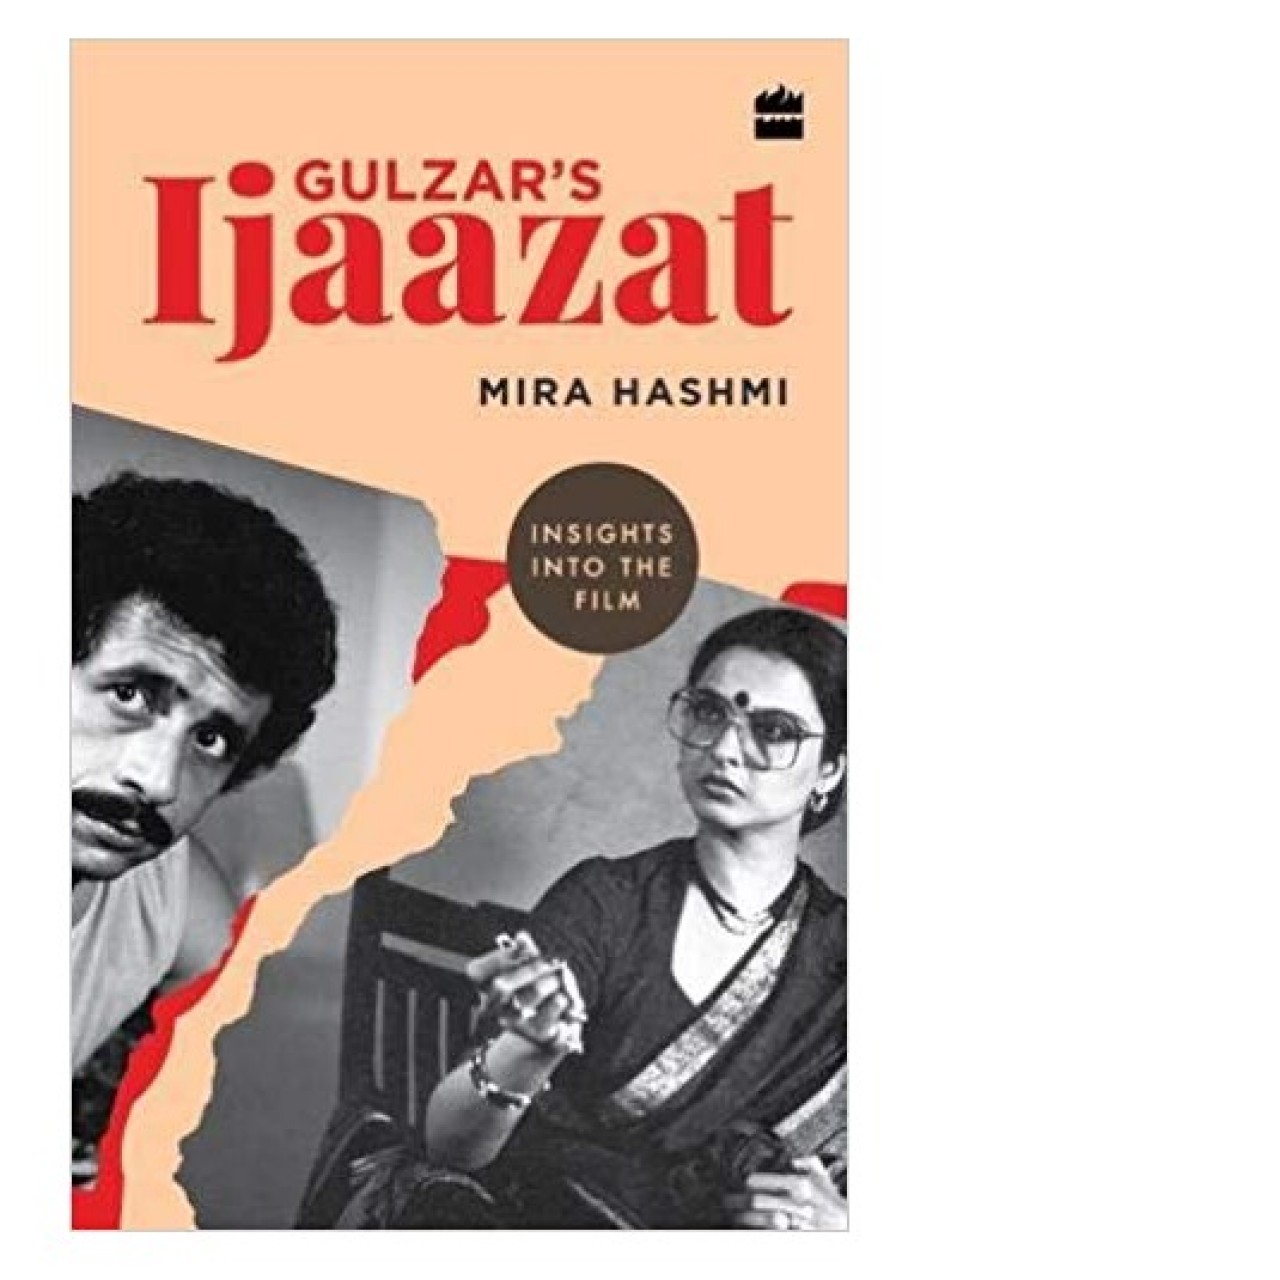 Gulzar's Ijaazat: Insights Into The Film by Mira Hashmi